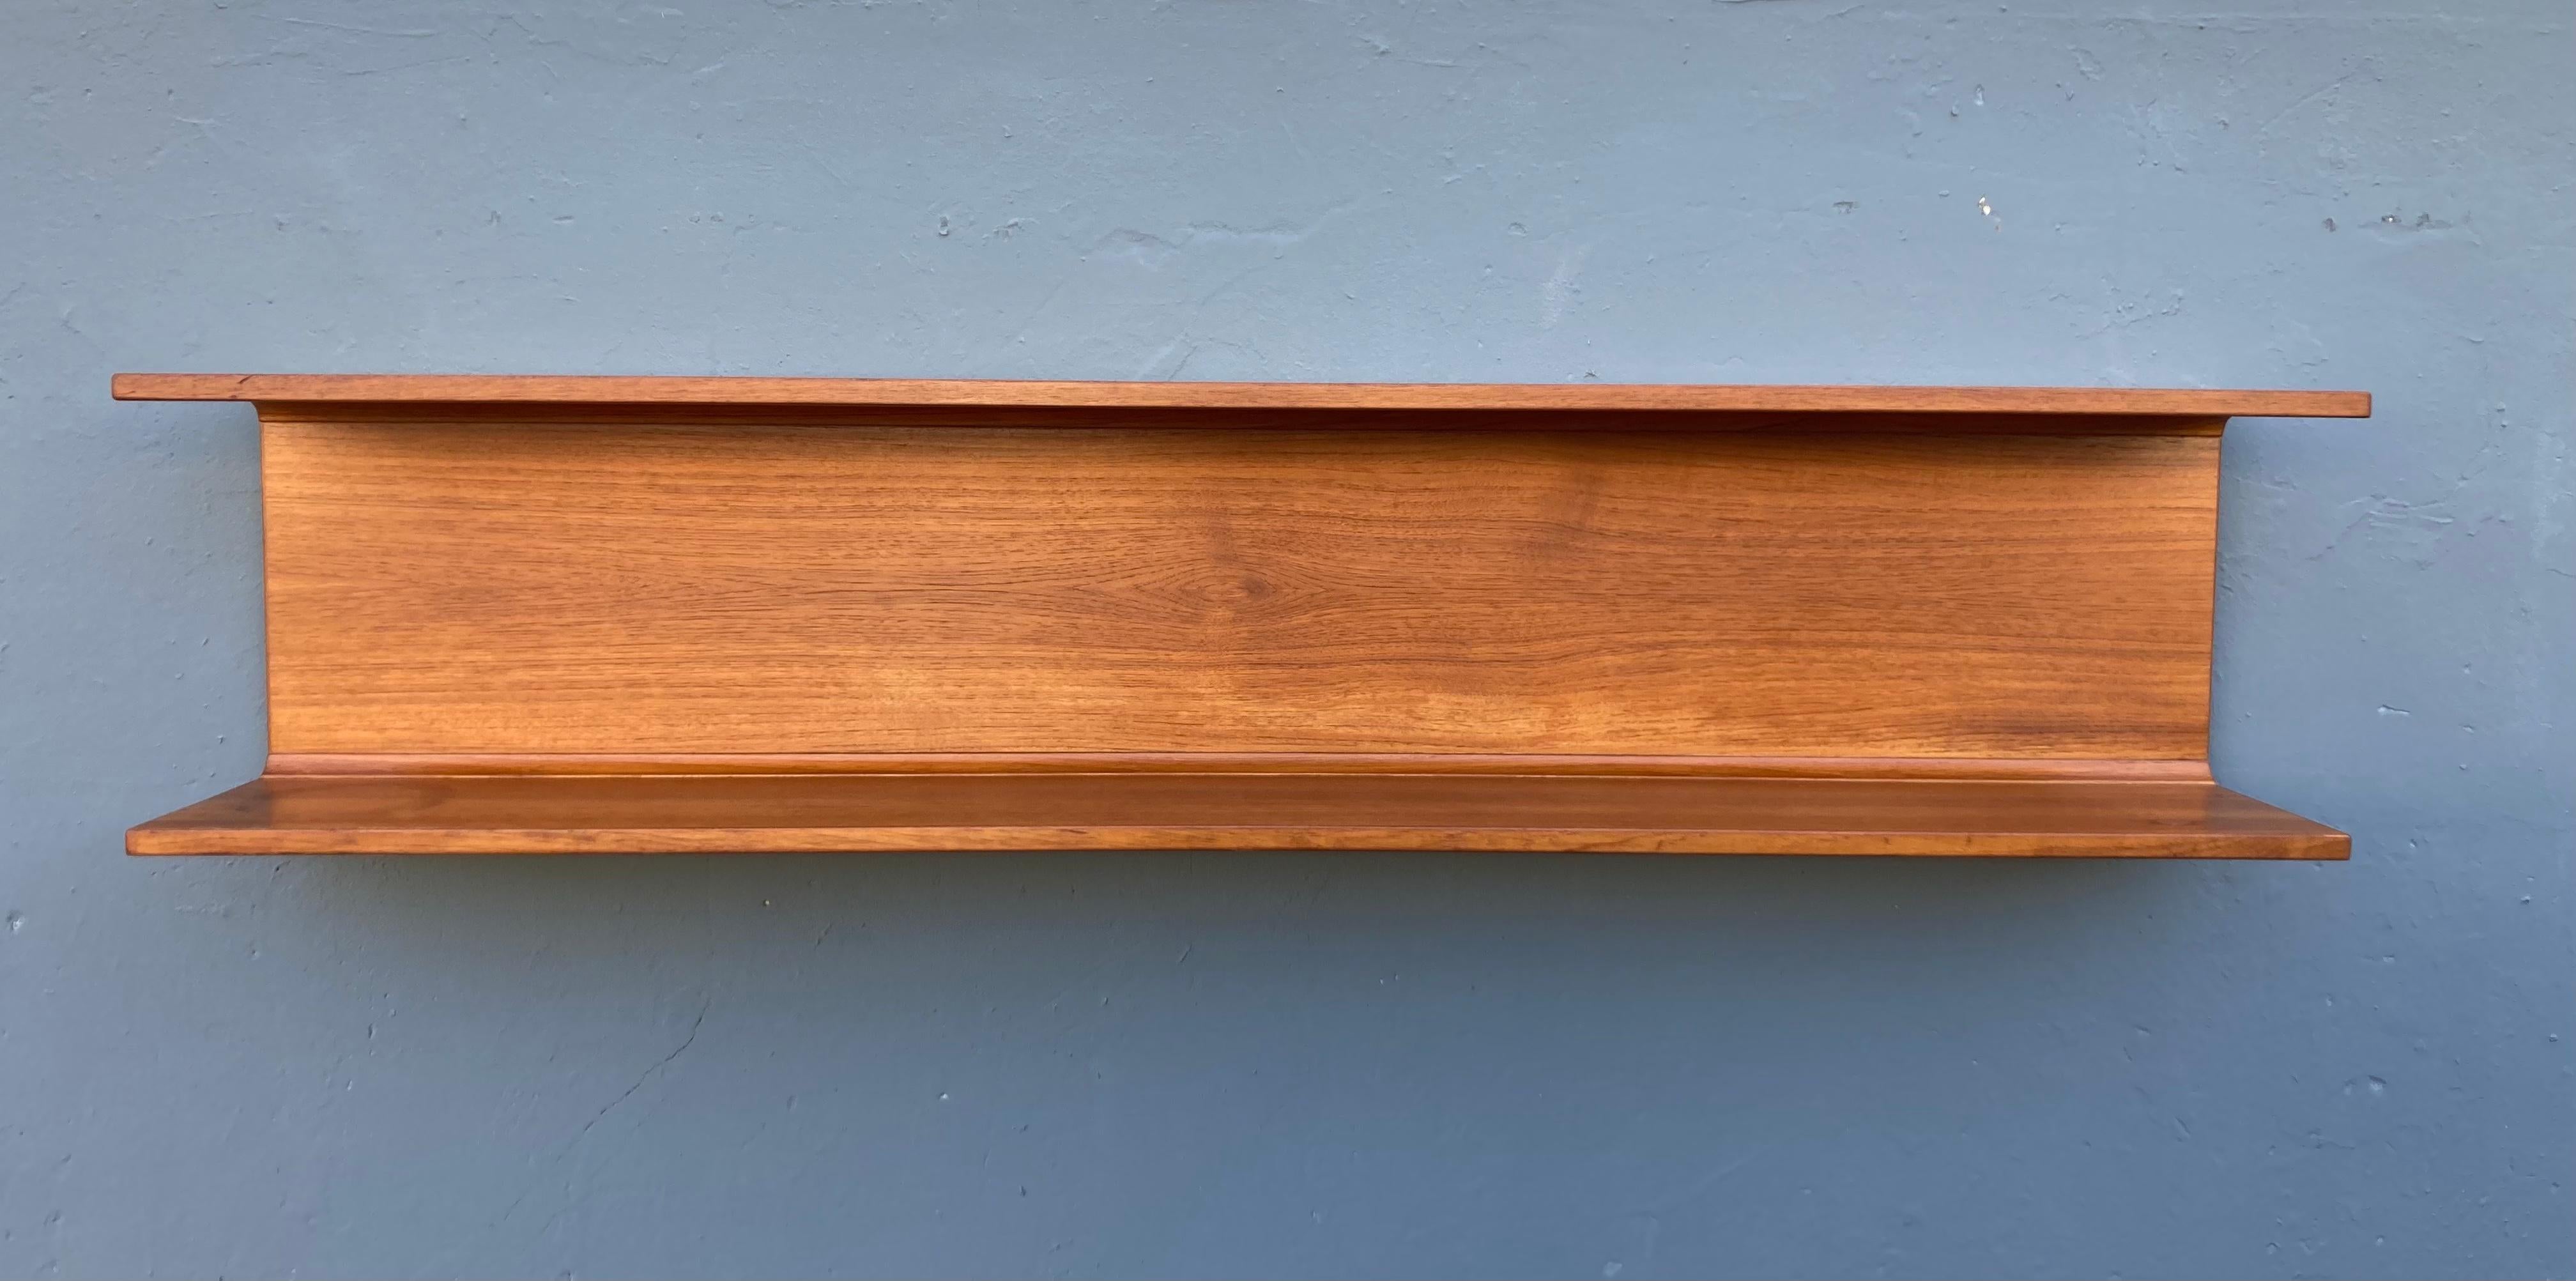 Large Pedersen & Hansen teak wall shelf. Storage depth is 7.25”.
Ready for a new home.